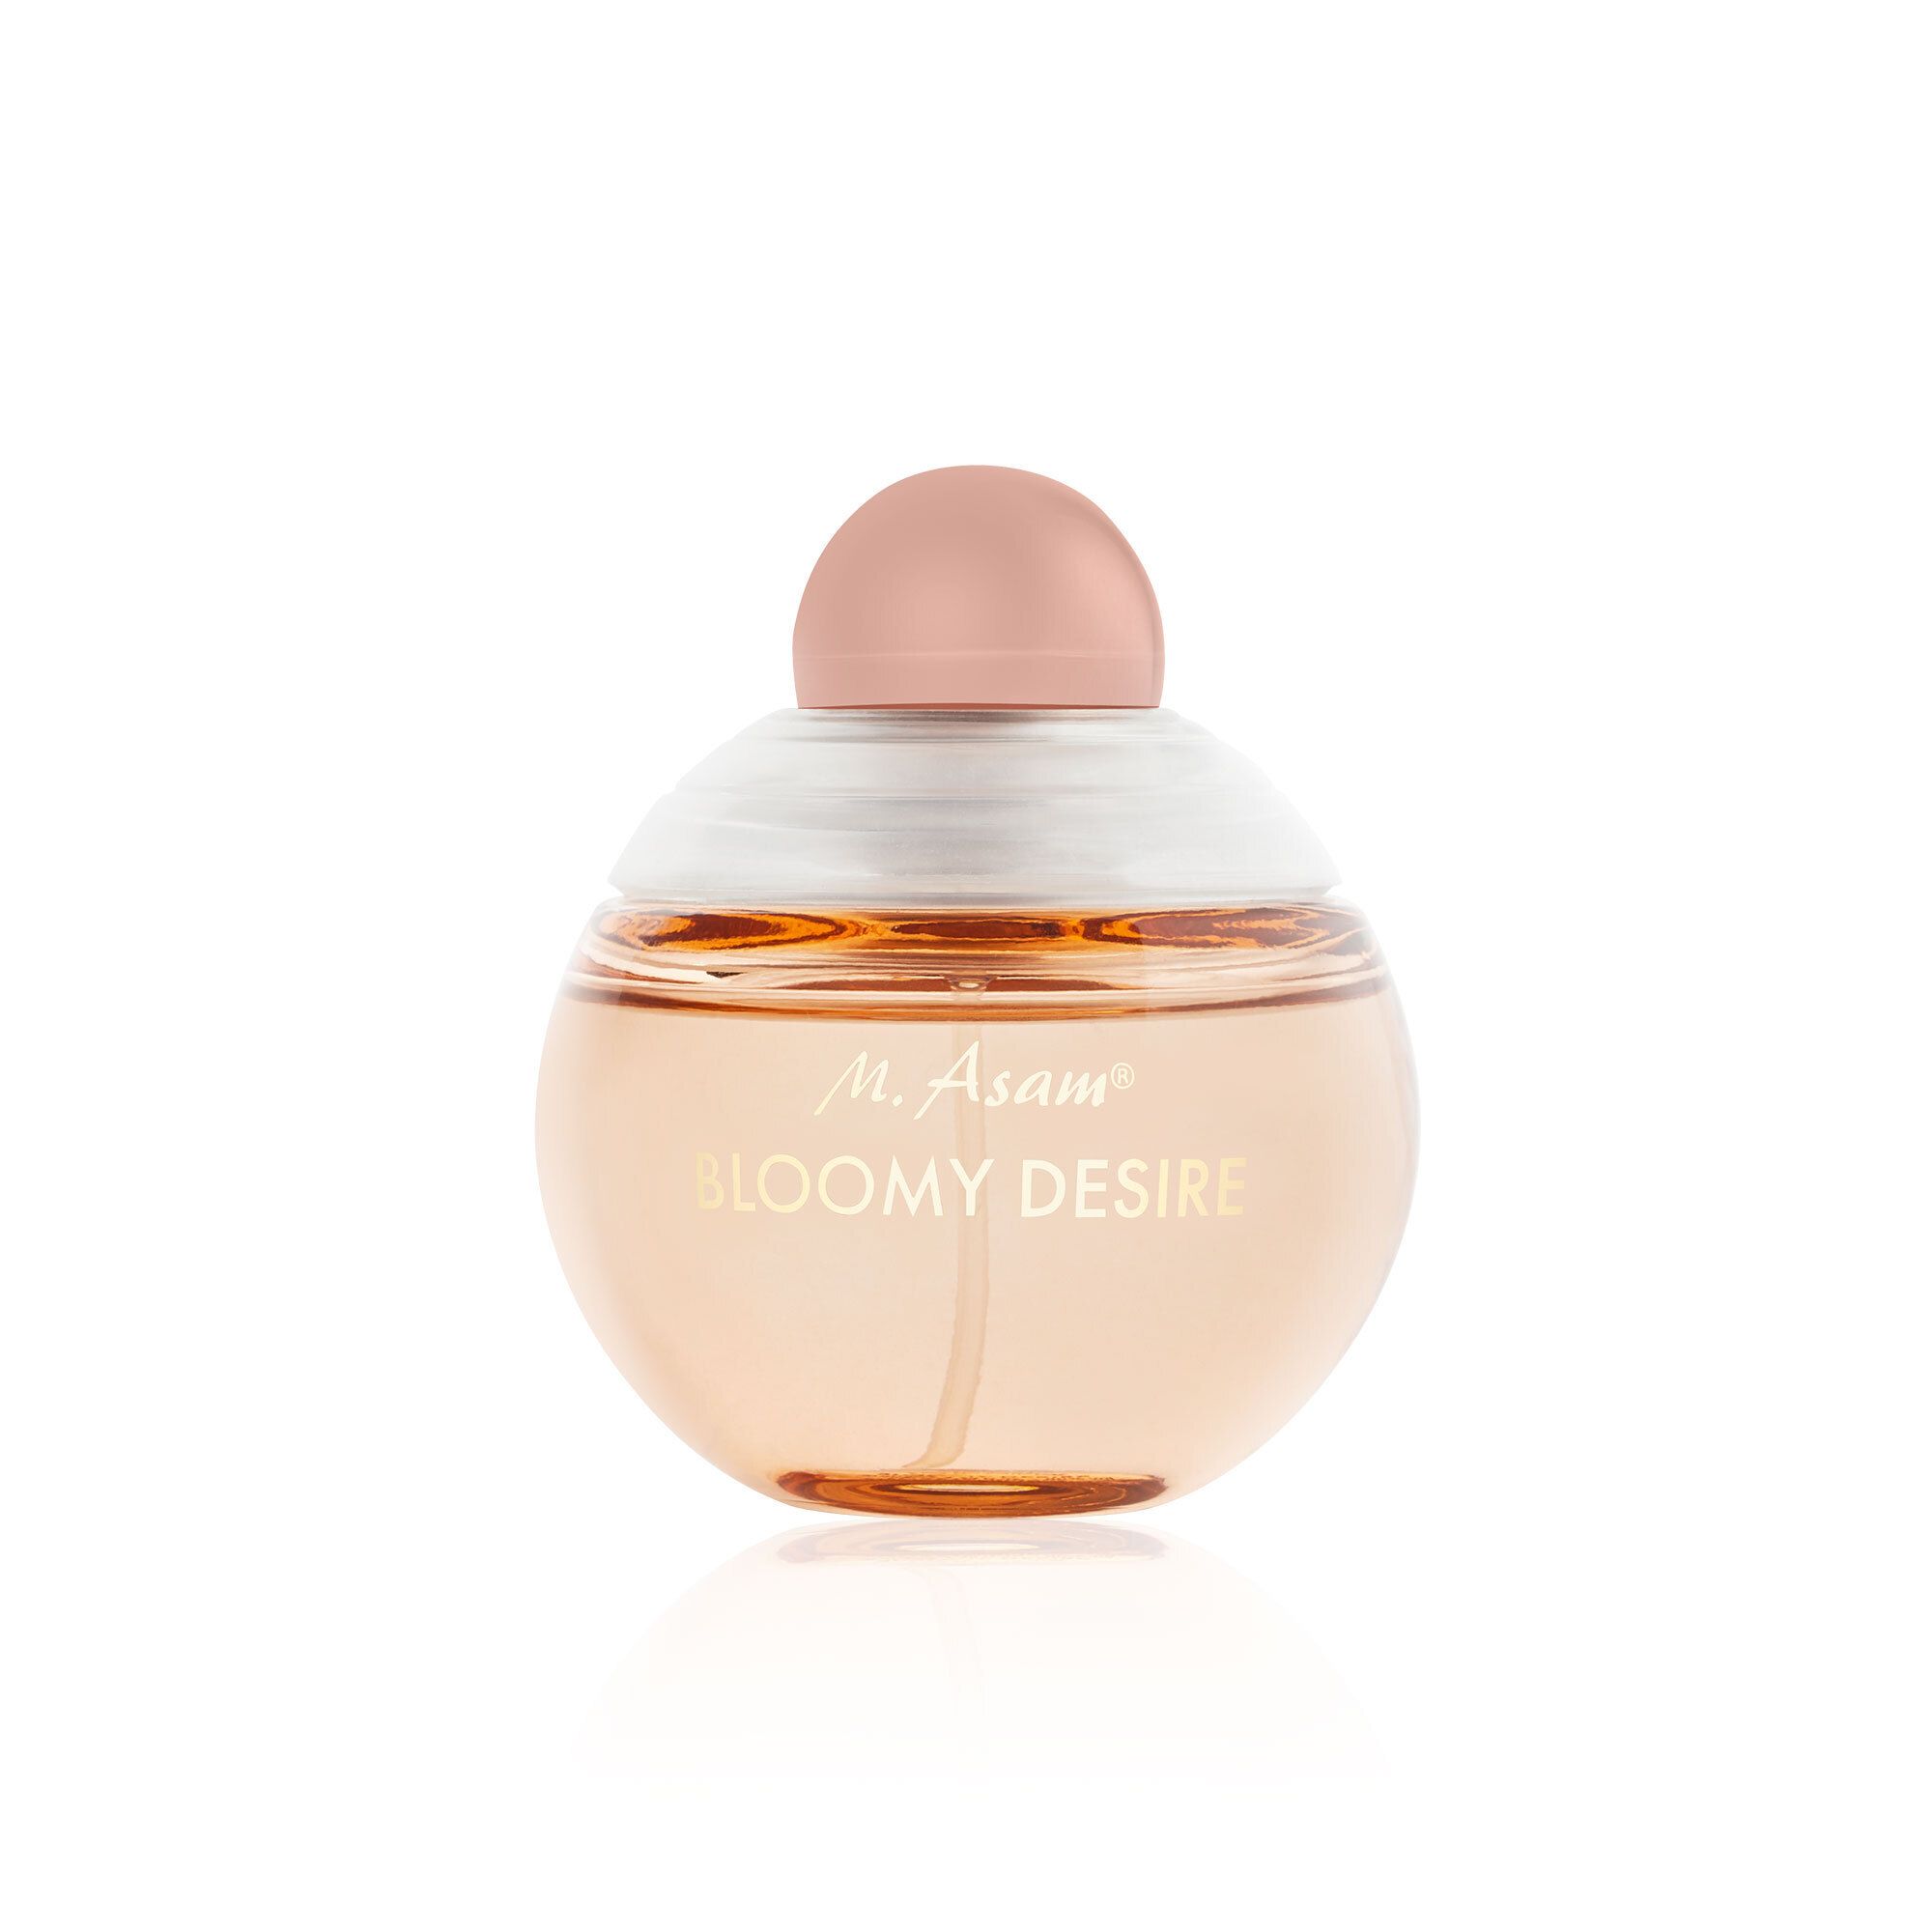 Bloomy Desire eau de parfum